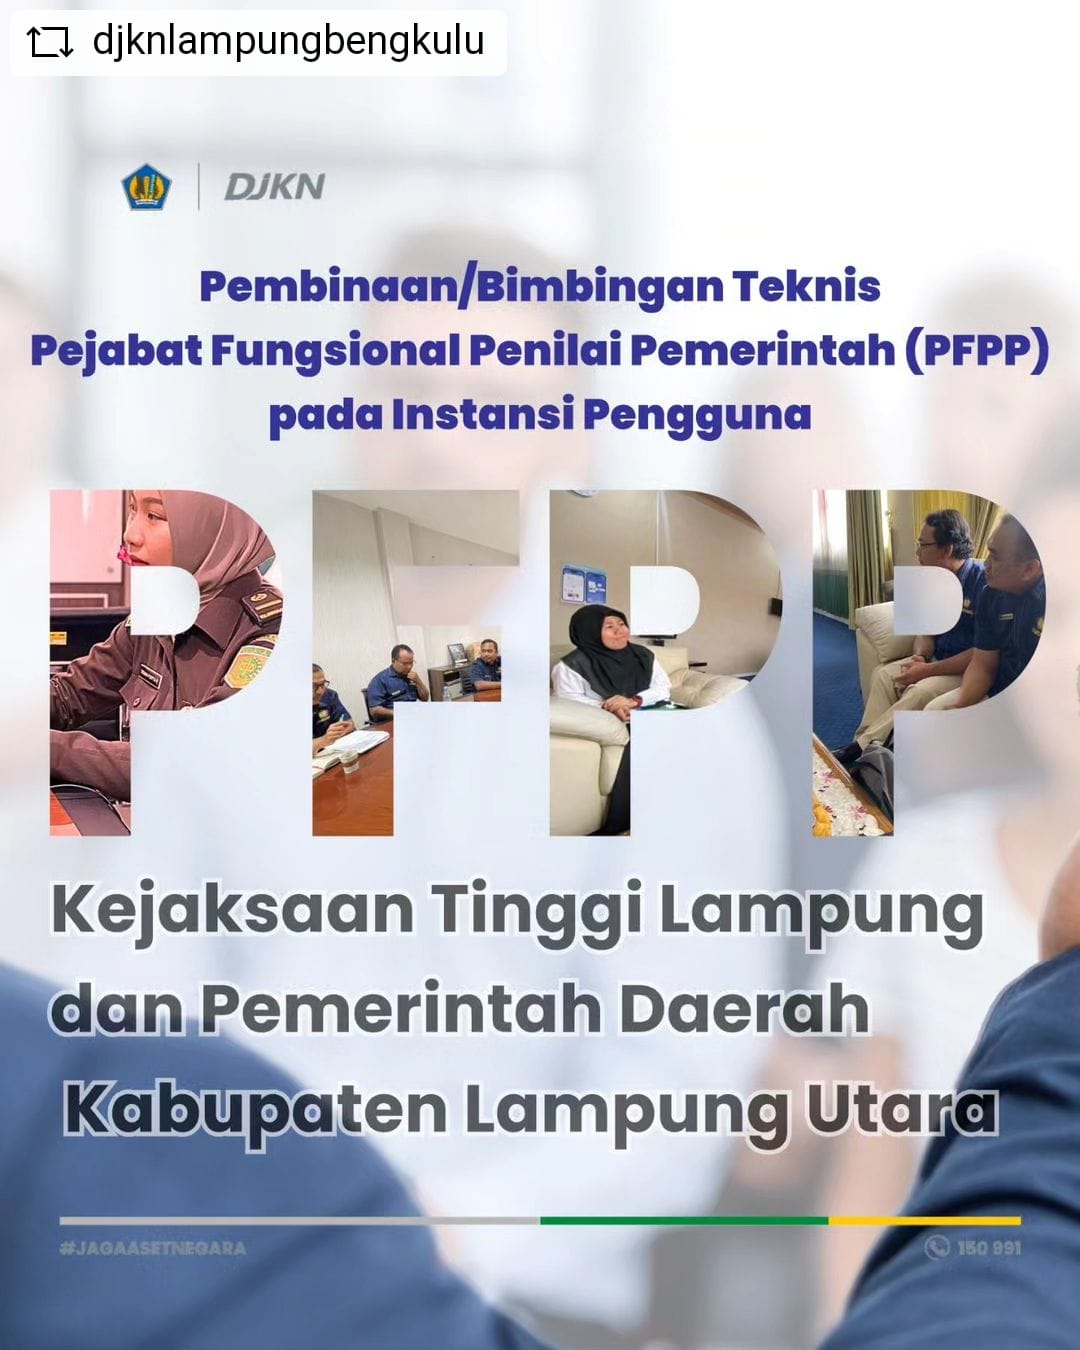 Bimbingan Teknis Pejabat Fungsional Penilai Pemerintah (PFPP) pada Kabupaten Lampung Utara dan Kejaksaan Tinggi Lampung